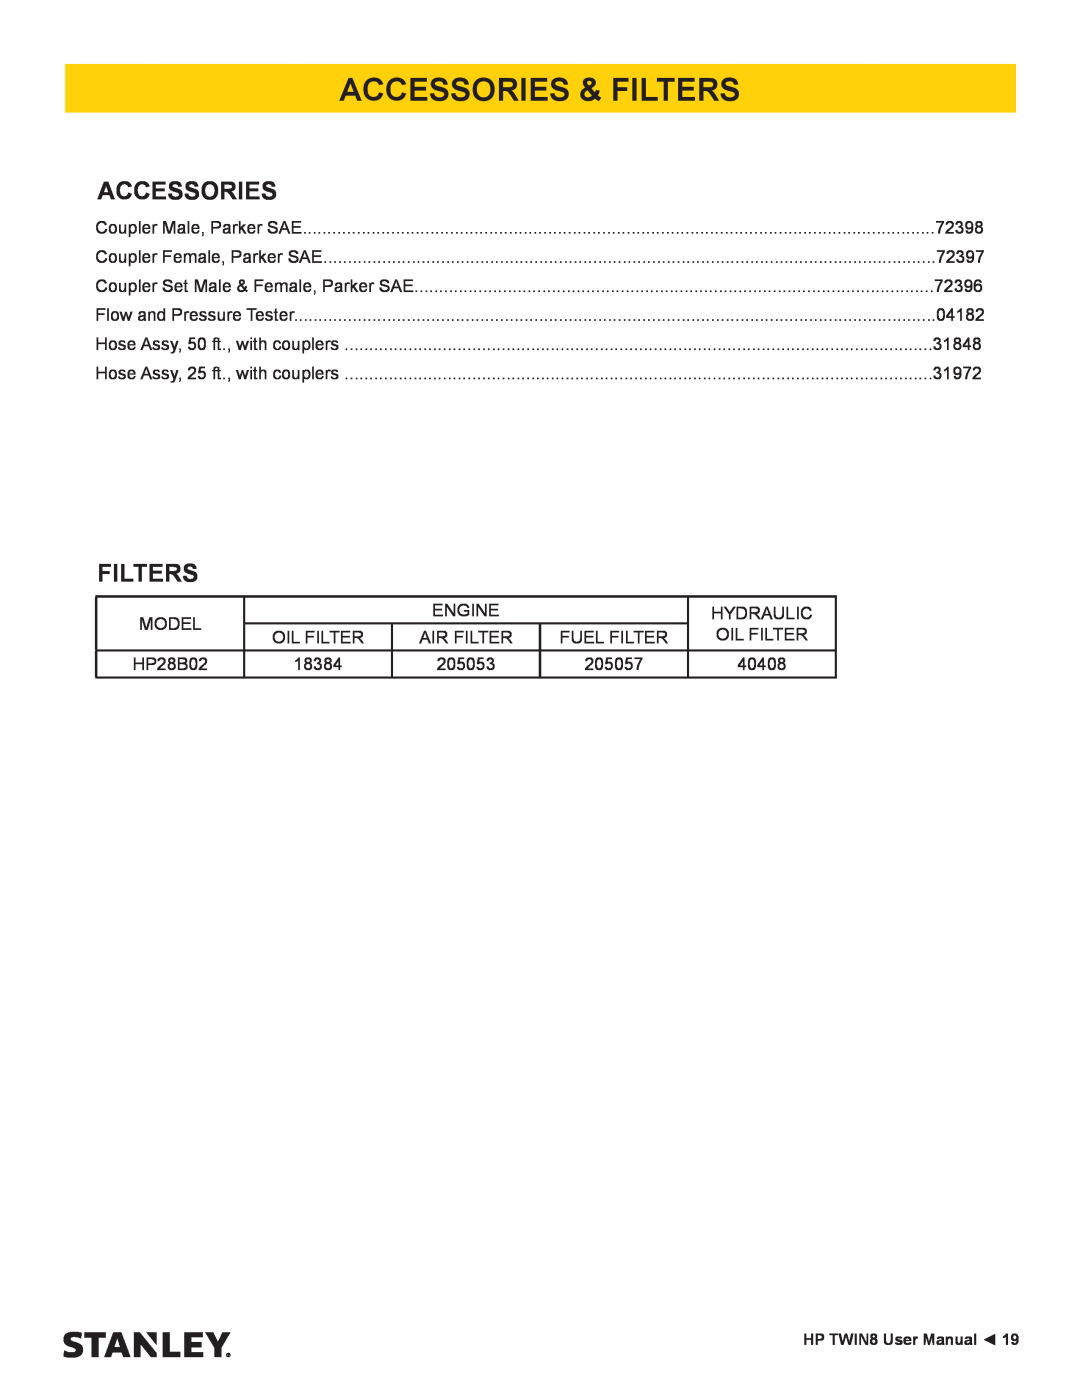 Stanley Black & Decker HP TWIN8 manual Accessories & Filters 